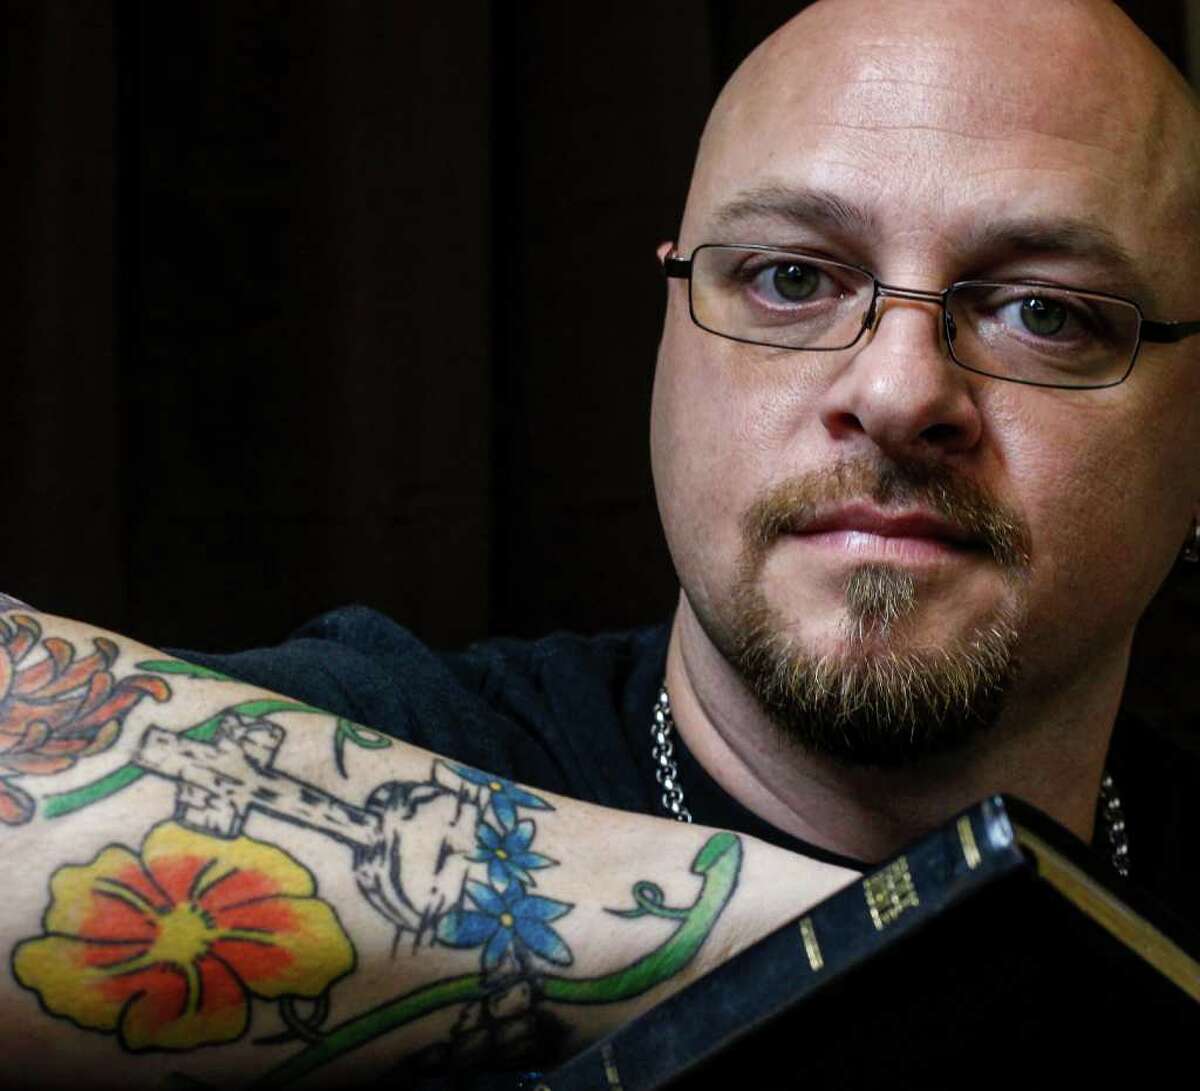 SESSIONS Greg Christians Precise Fun Twist on Traditional Tattoos   Tattoodo